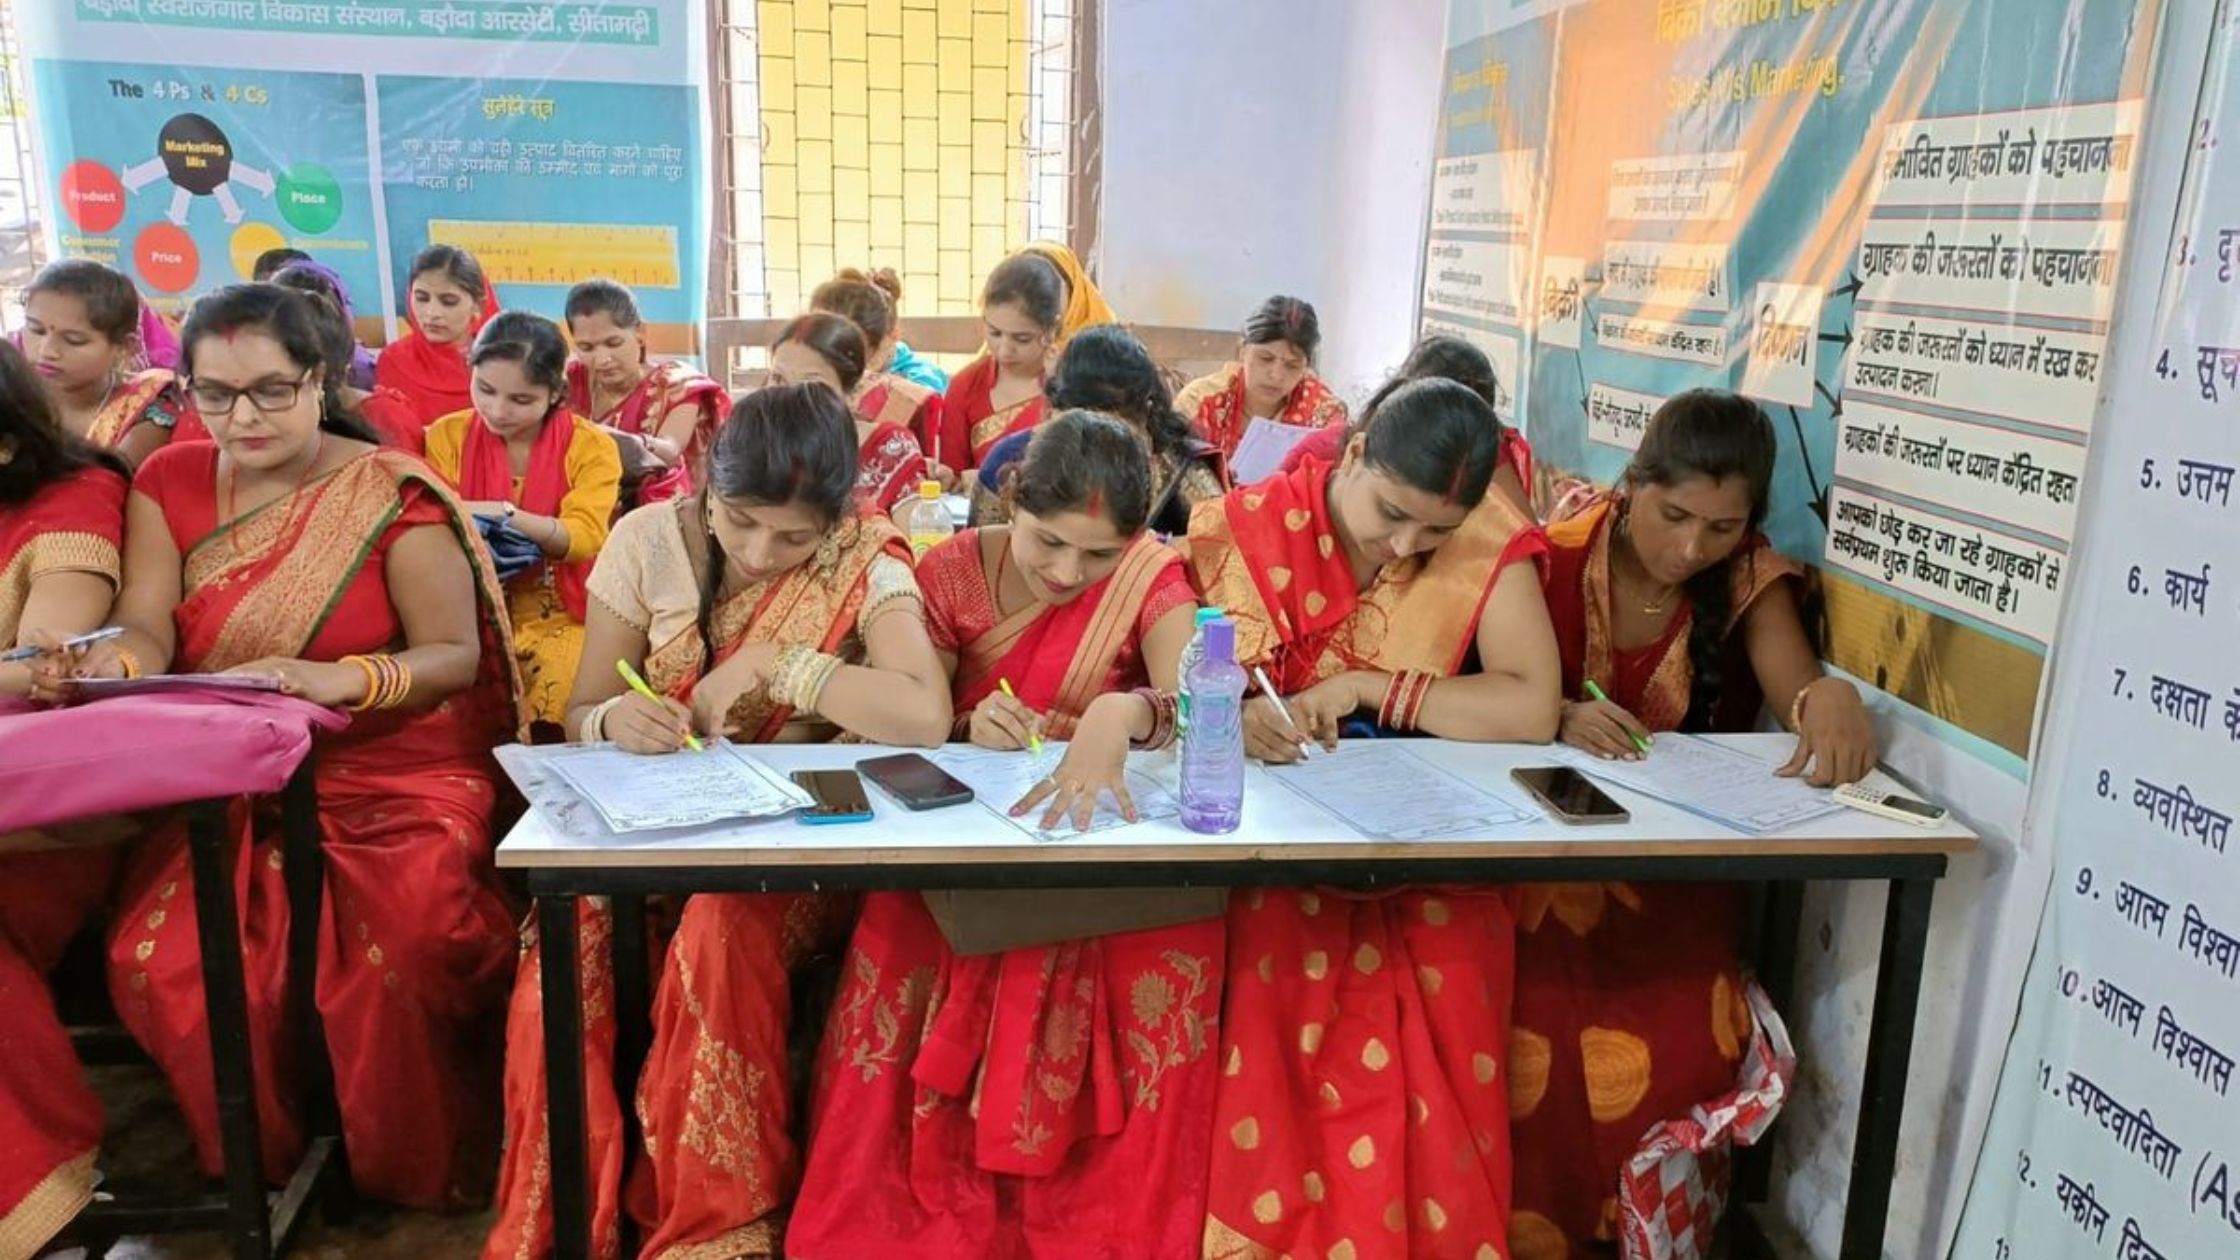 More than 600 women of Bihar will become entrepreneurs